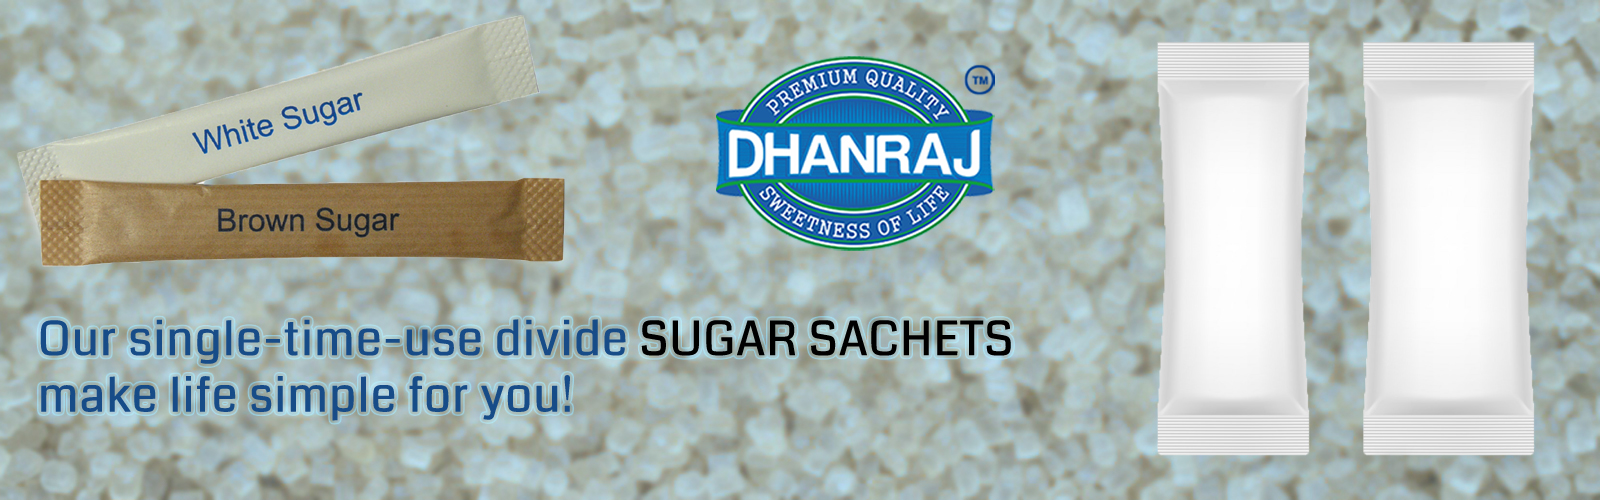 sugar sachets,sugar sachets suppliers in india